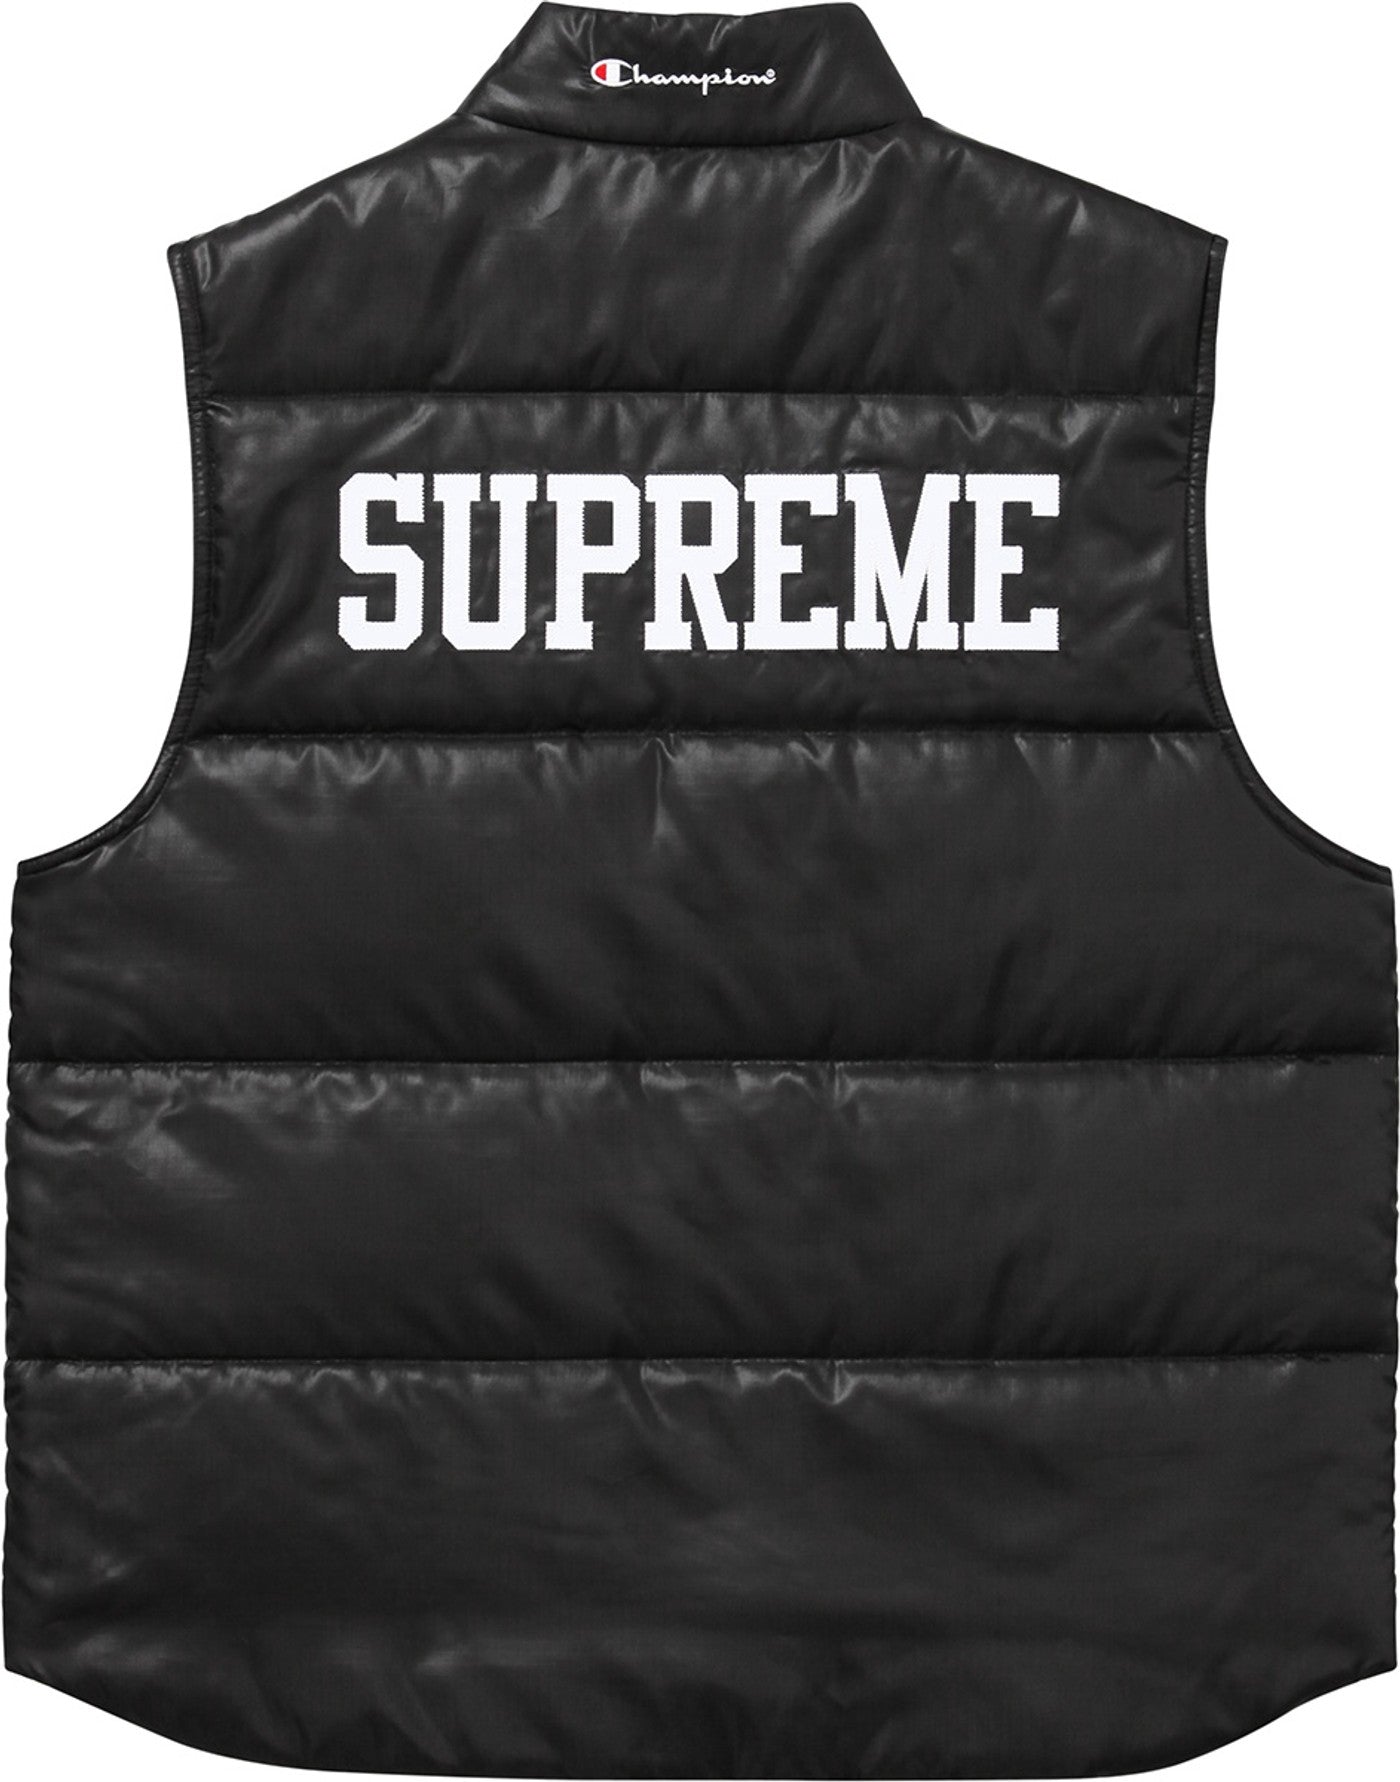 Supreme x Champion Puffy Vest Black (SS17) (Preowned)